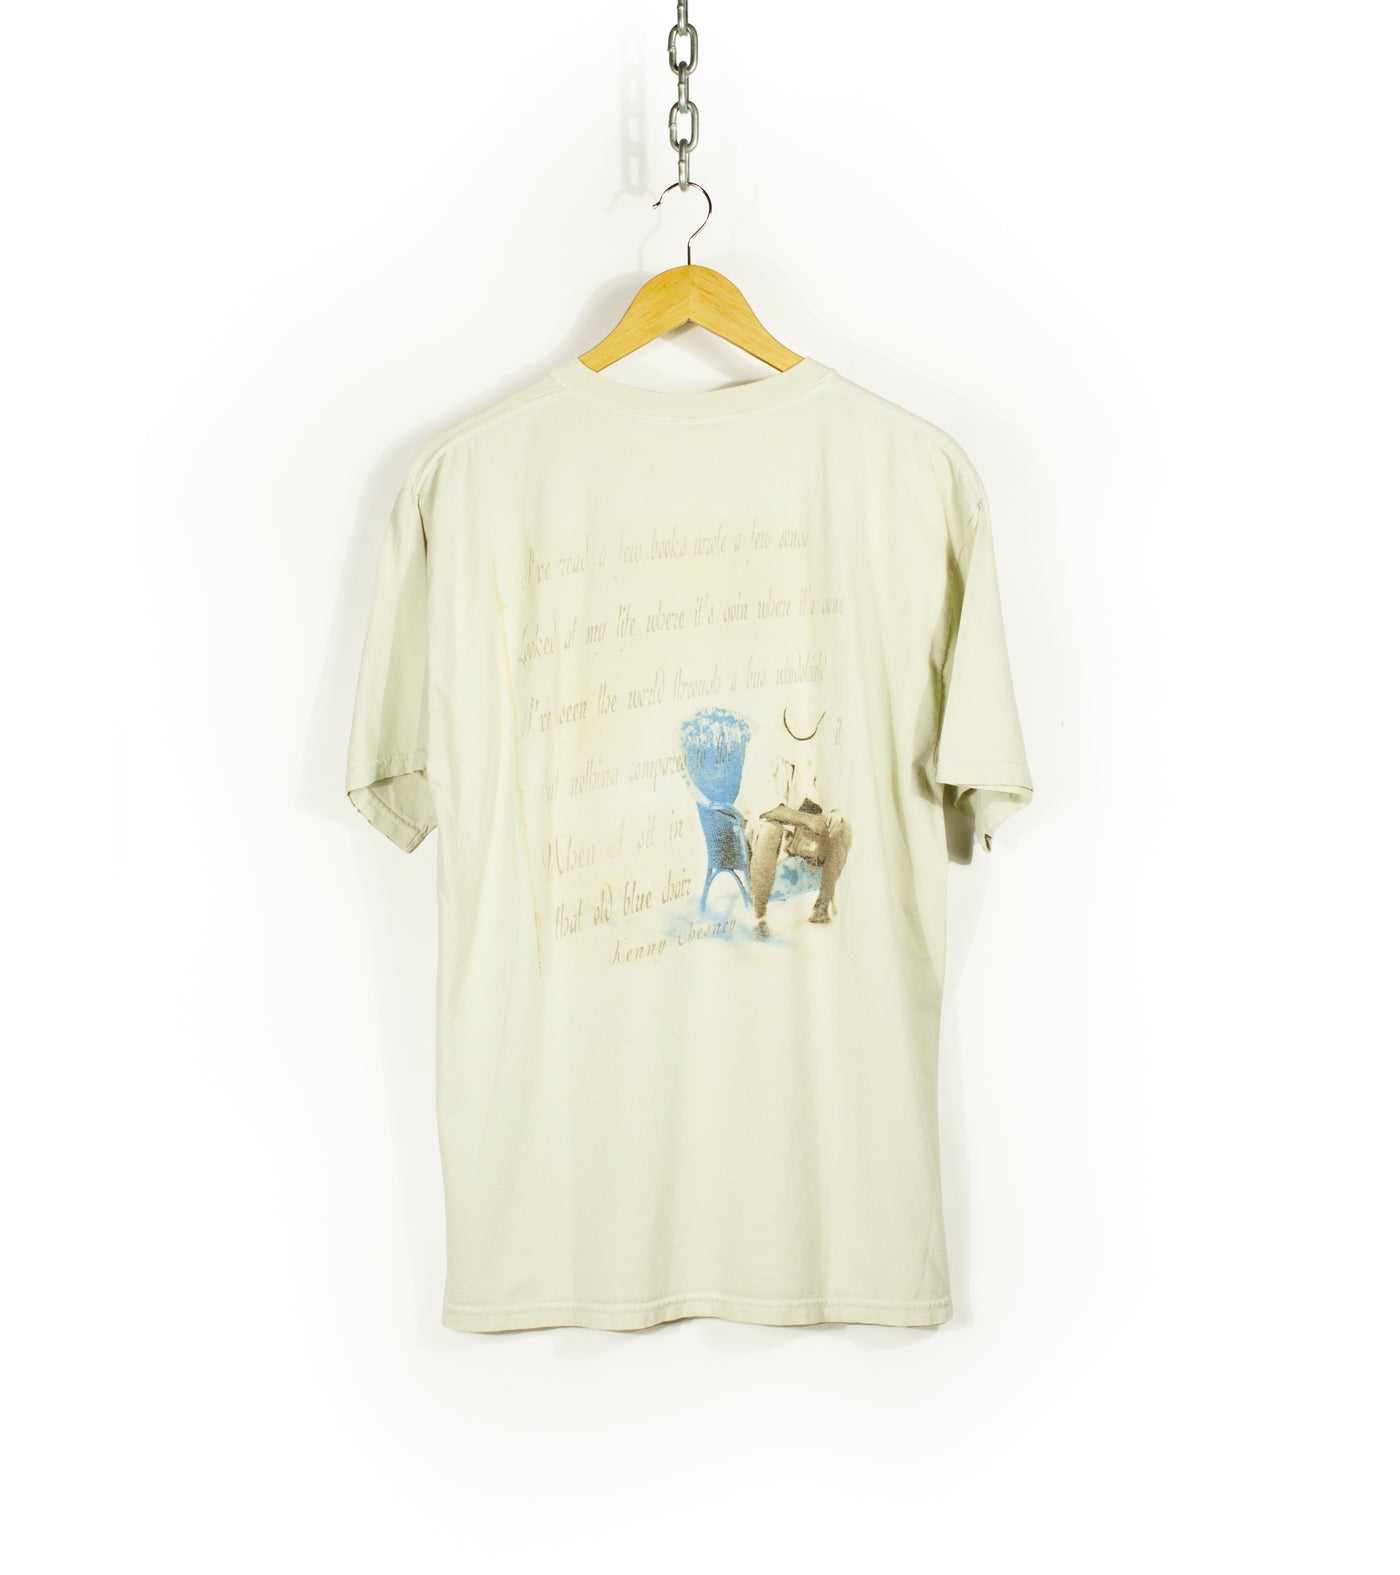 2005 Kenny Chesney Band T-Shirt